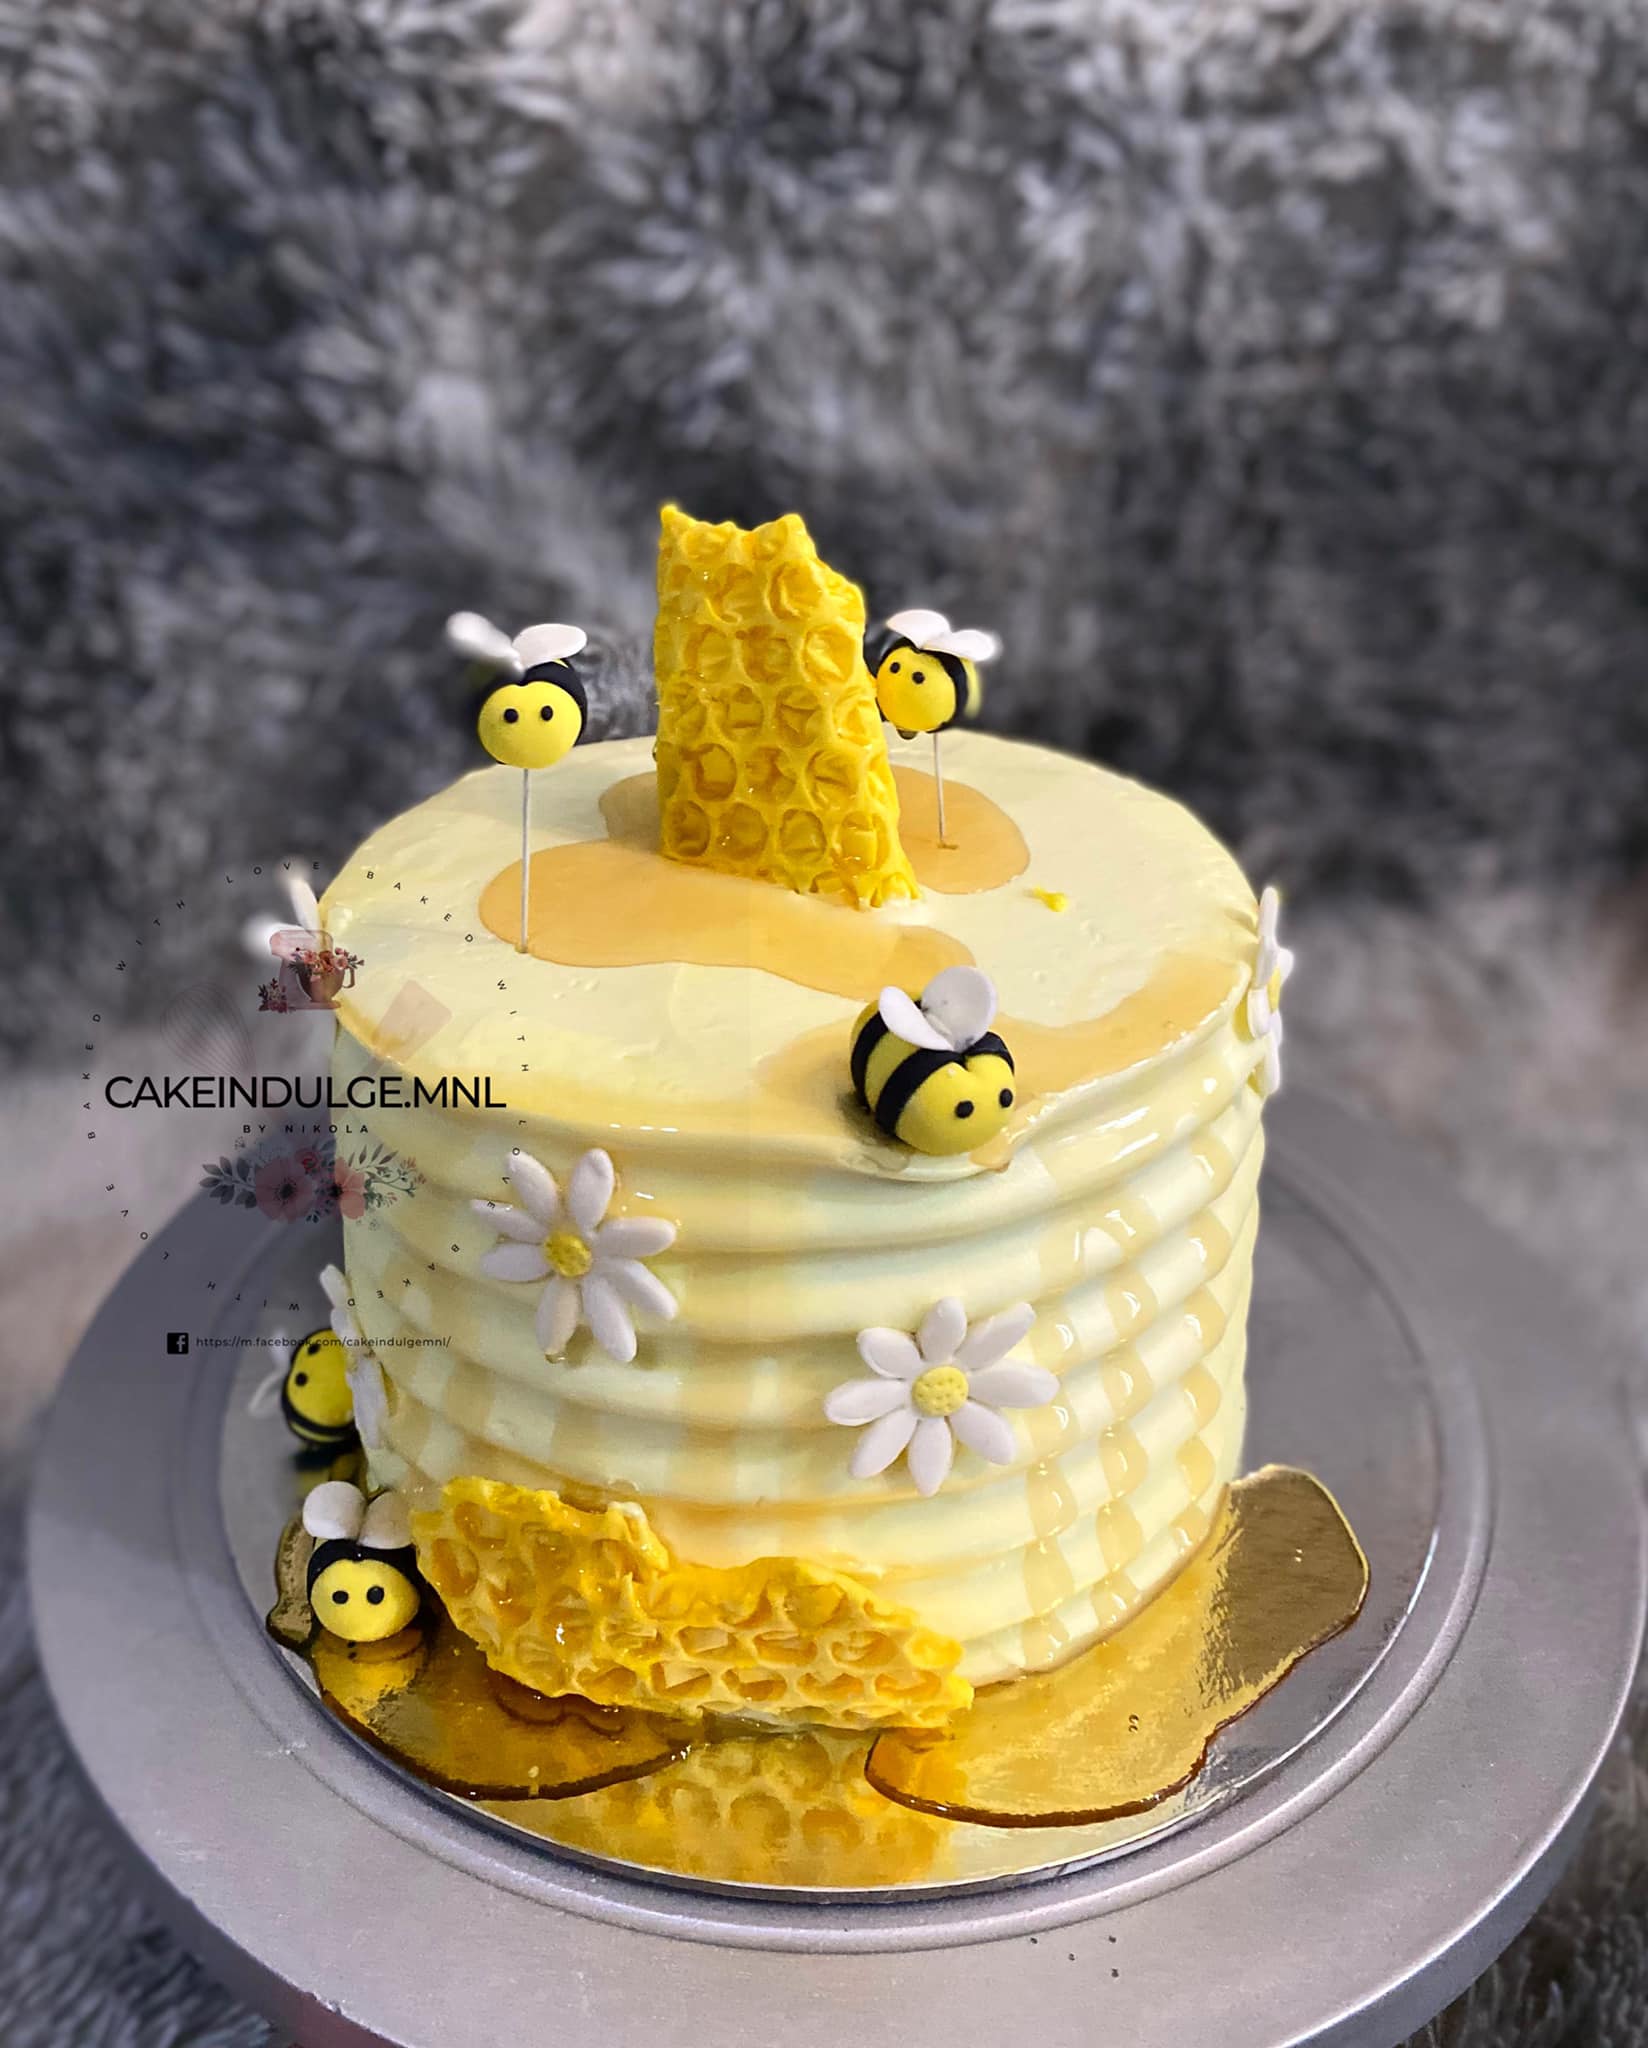 Honey Cake Log – Corica Pastries